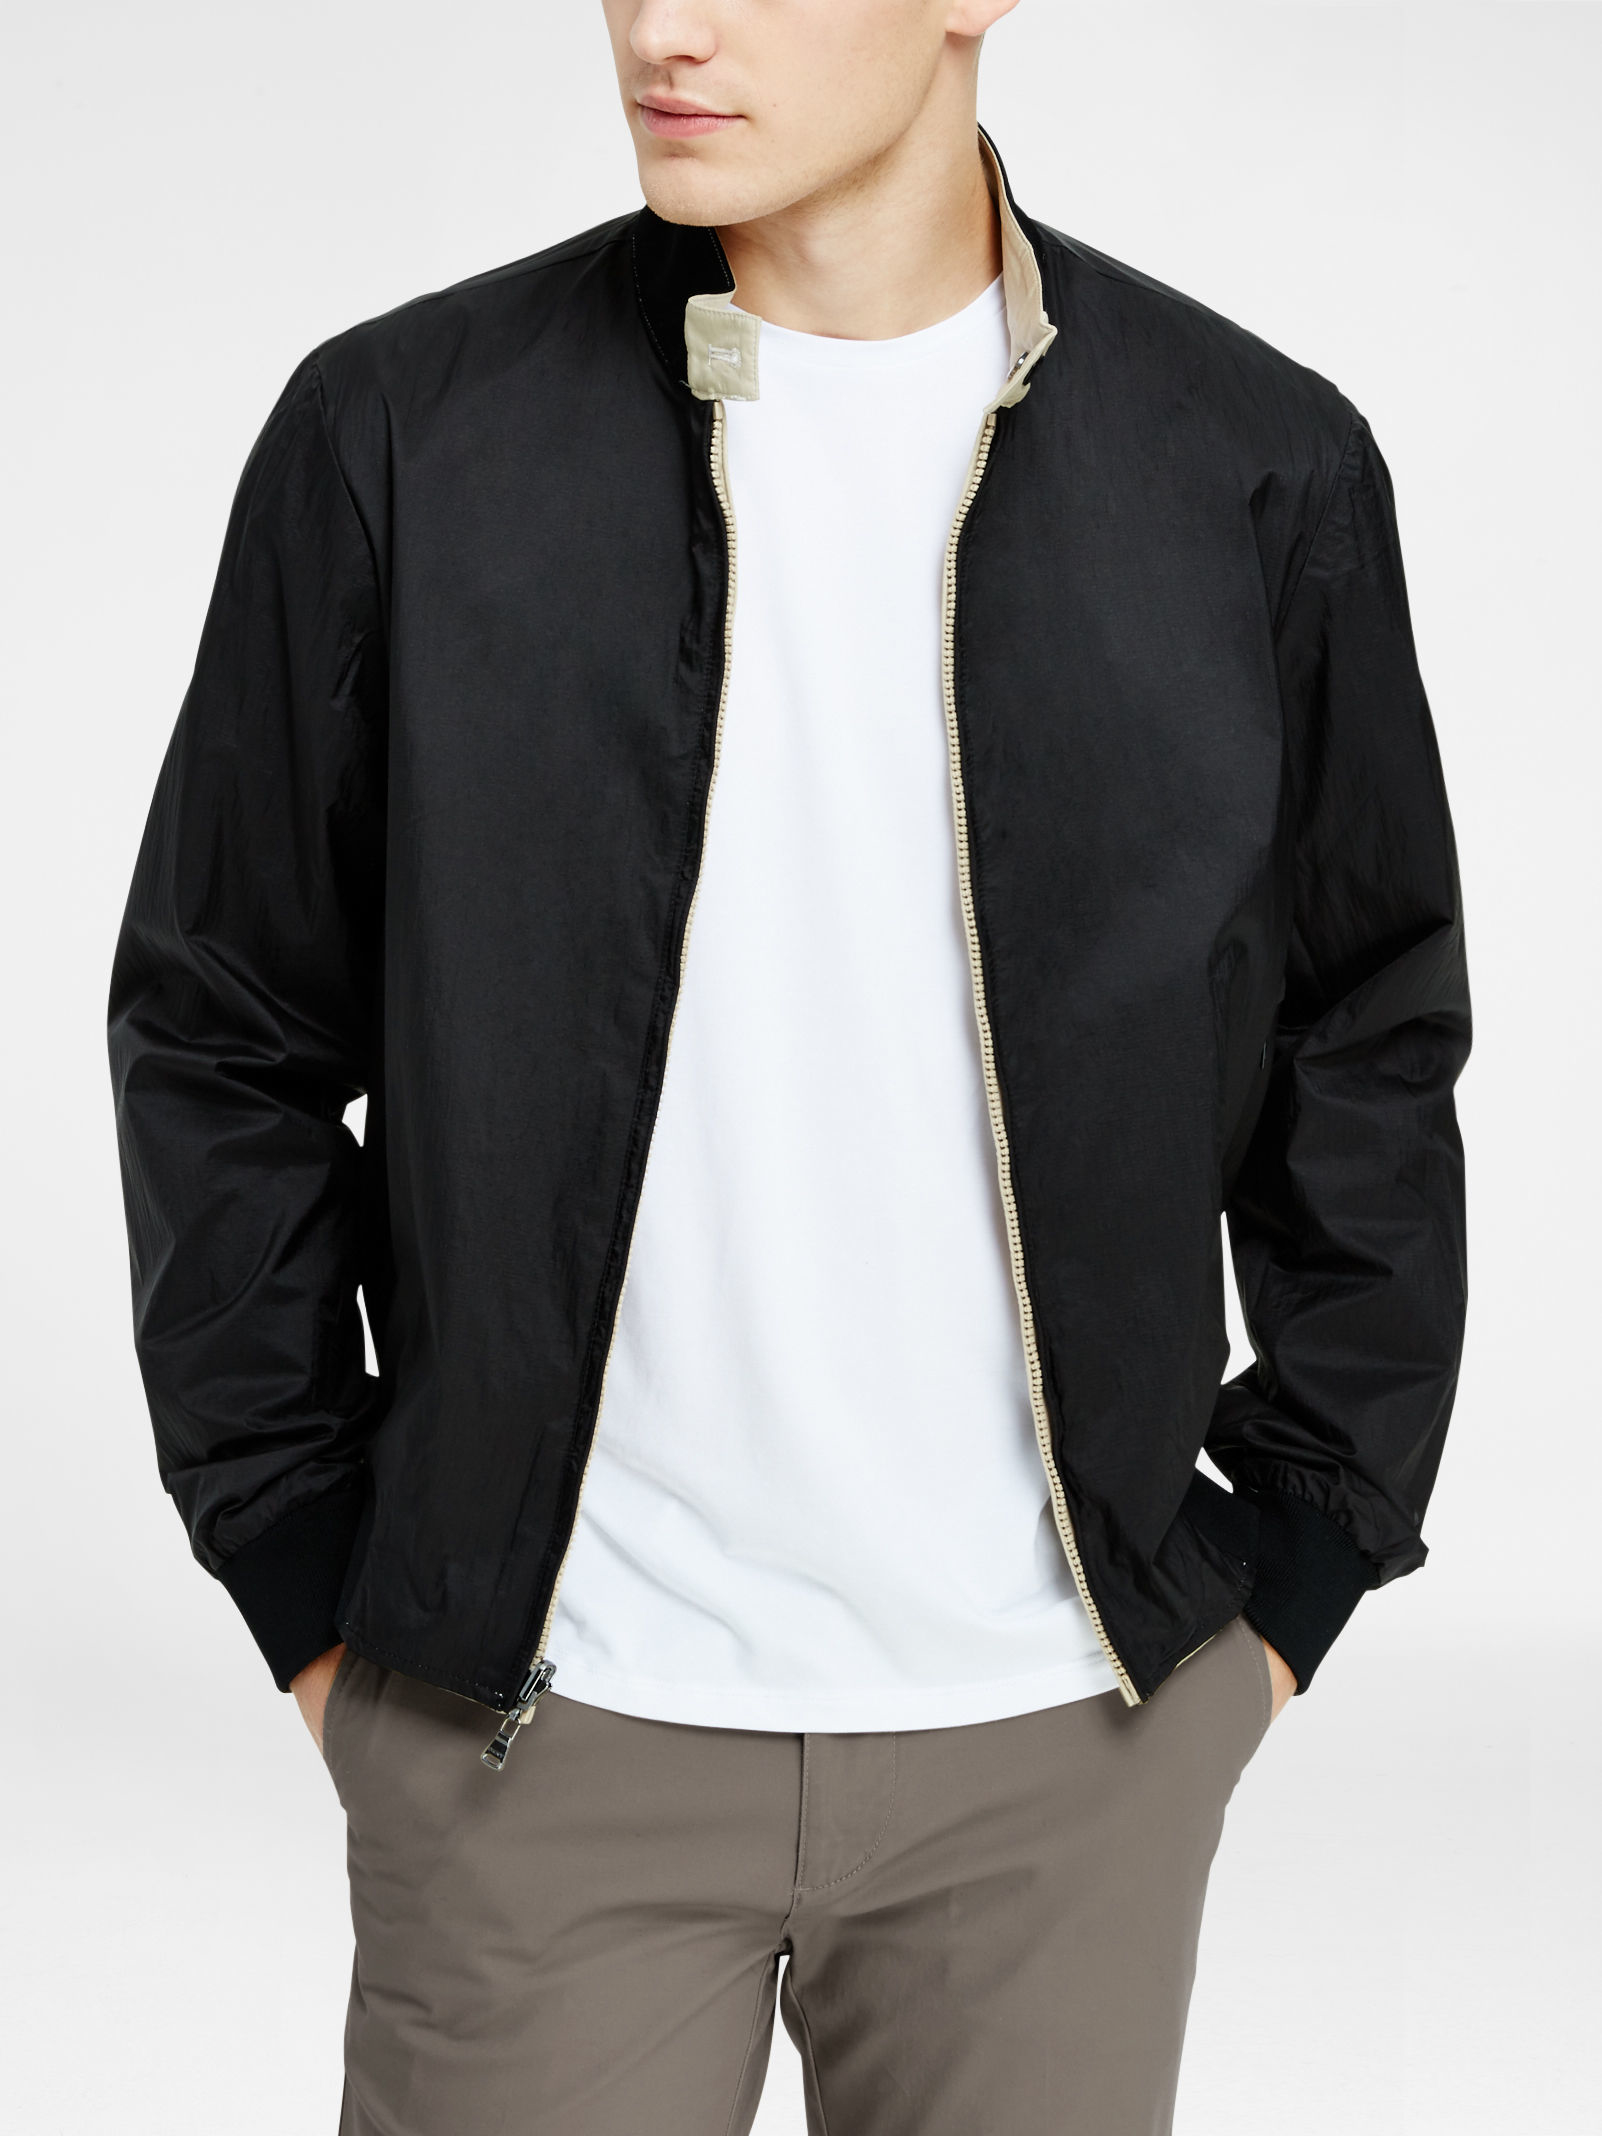 Download Lyst - Dkny Reversible Harrington Jacket for Men